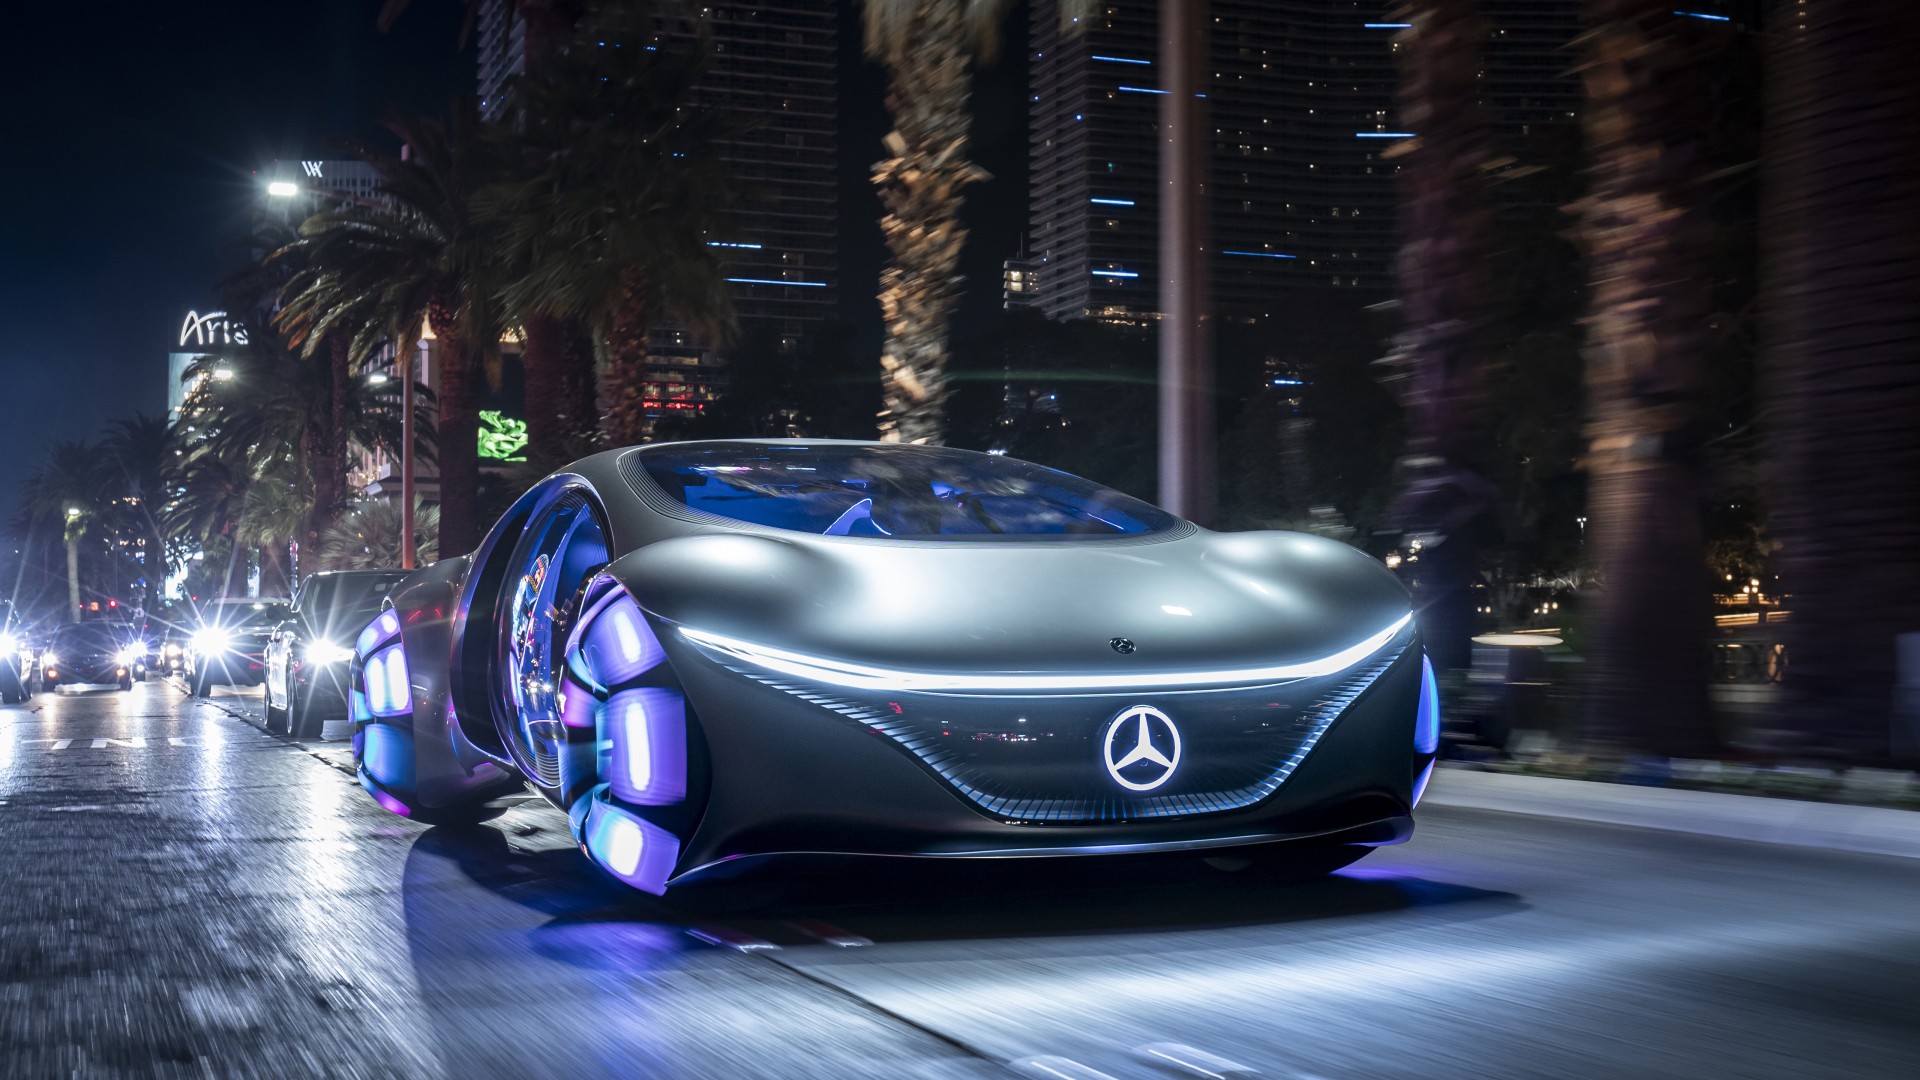 2020 Mercedes-Benz VISION AVTR 5K 4 Wallpaper | HD Car ...